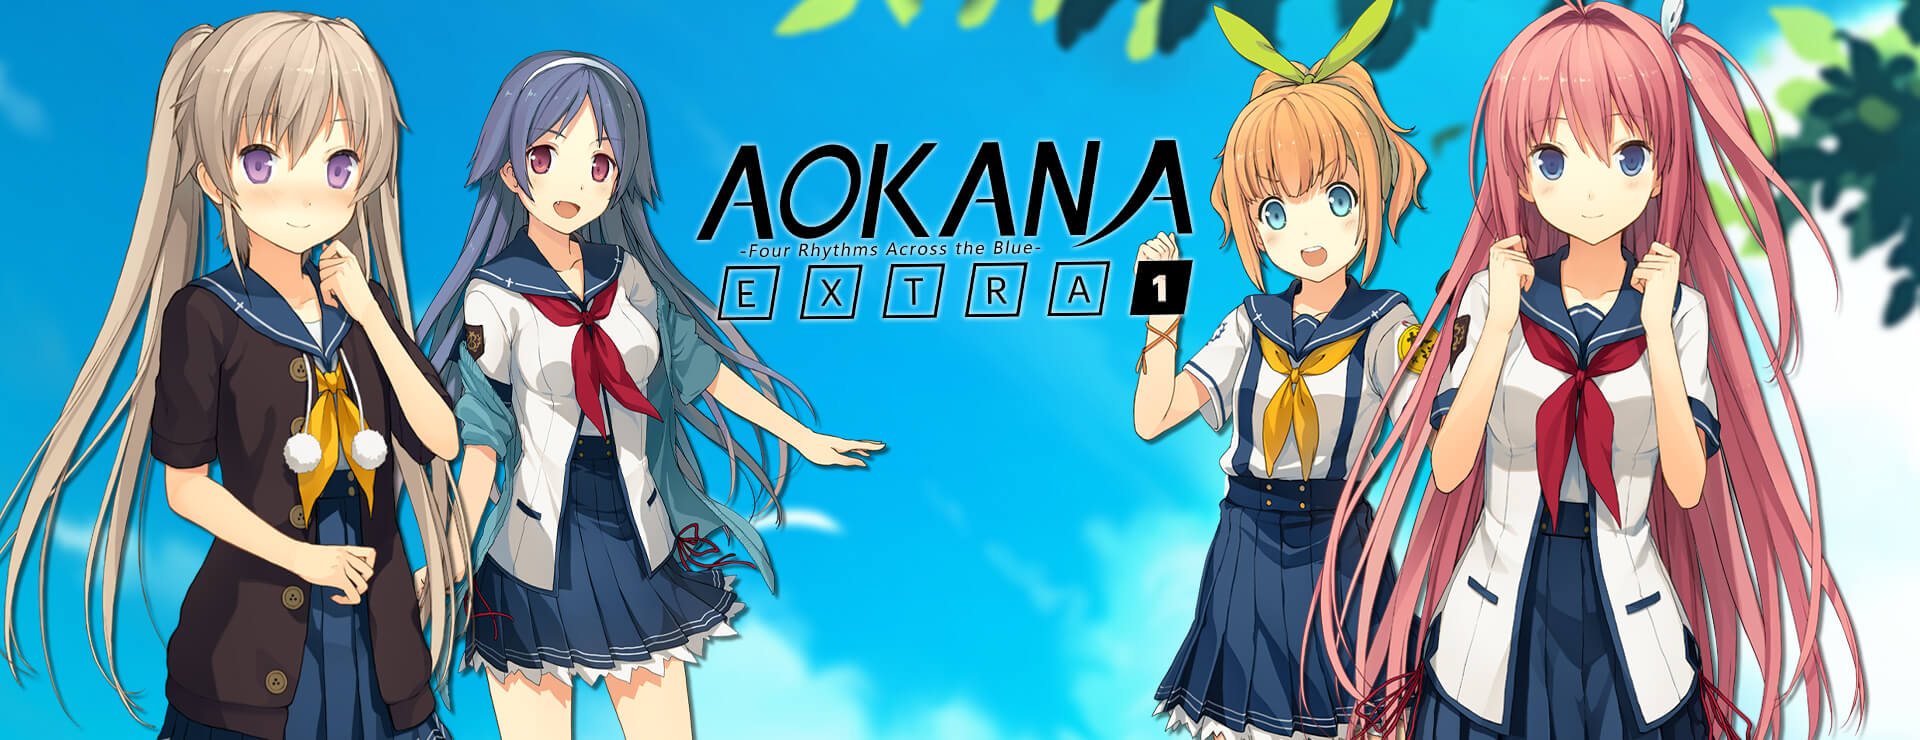 Aokana - EXTRA1 - ビジュアルノベル ゲーム